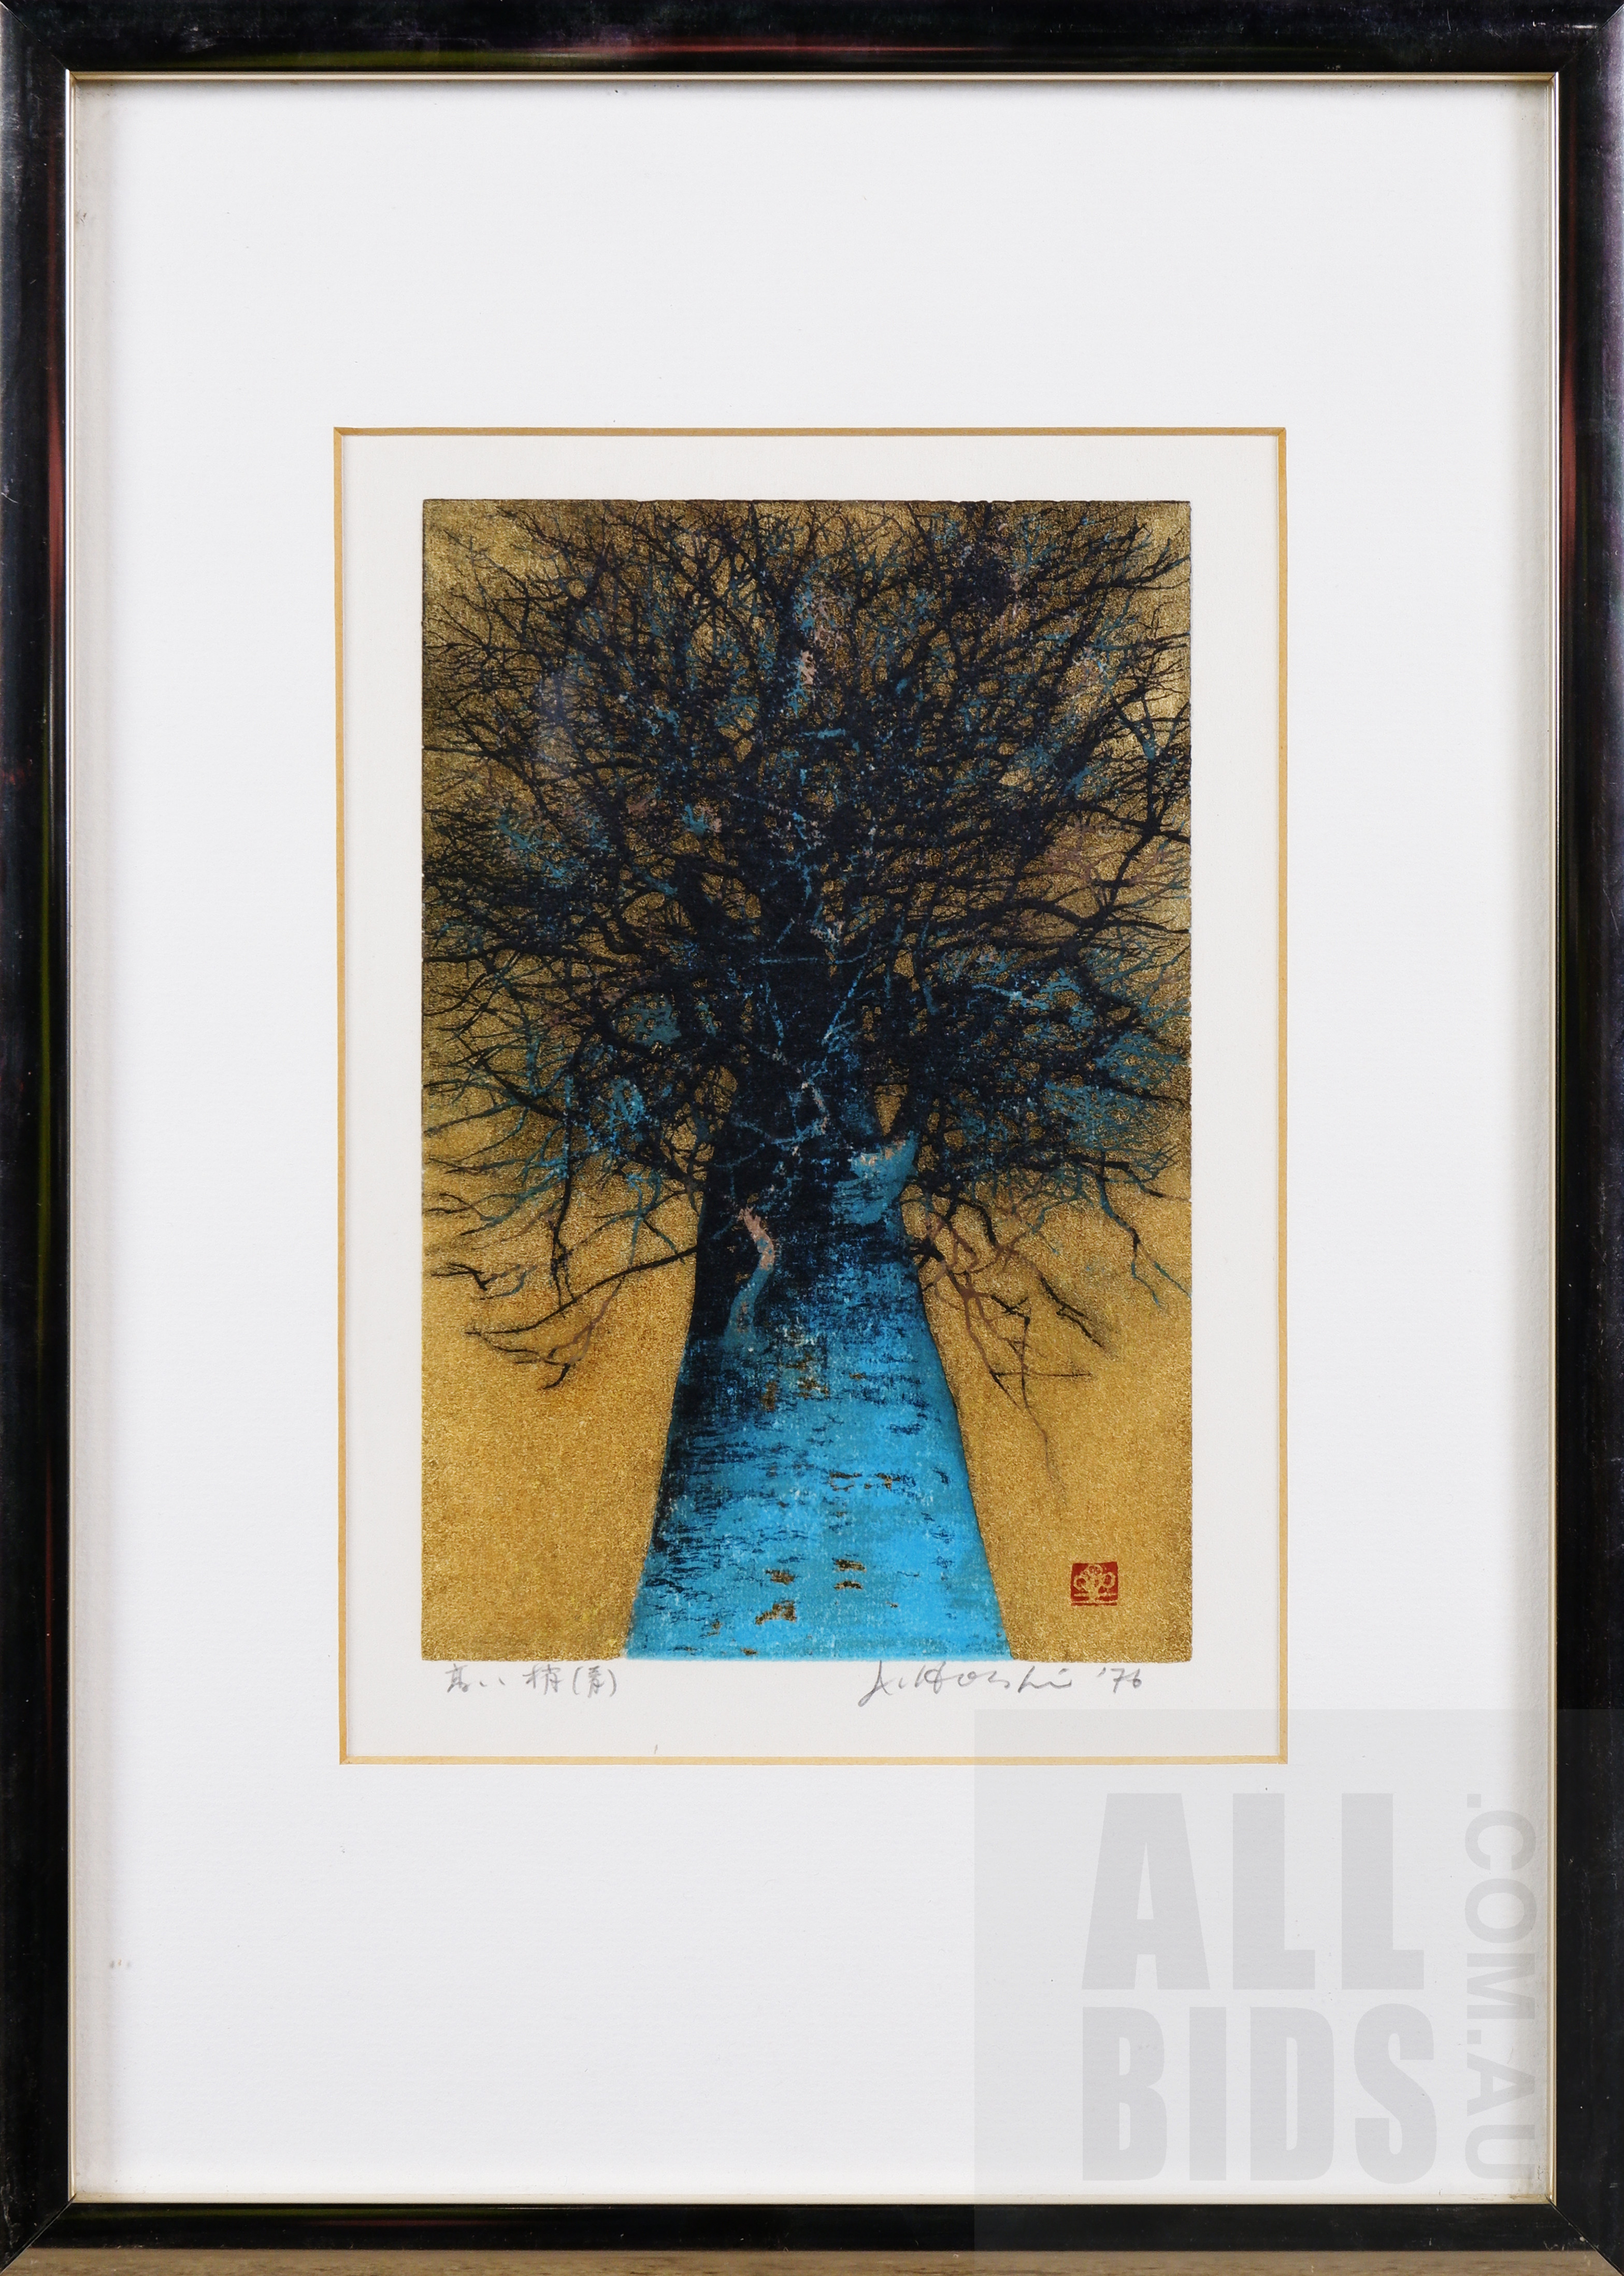 'Joichi Hoshi (1913-1979, Japanese), High Treetops (Blue) 1976, Woodblock, 18 x 12 cm (image size)'